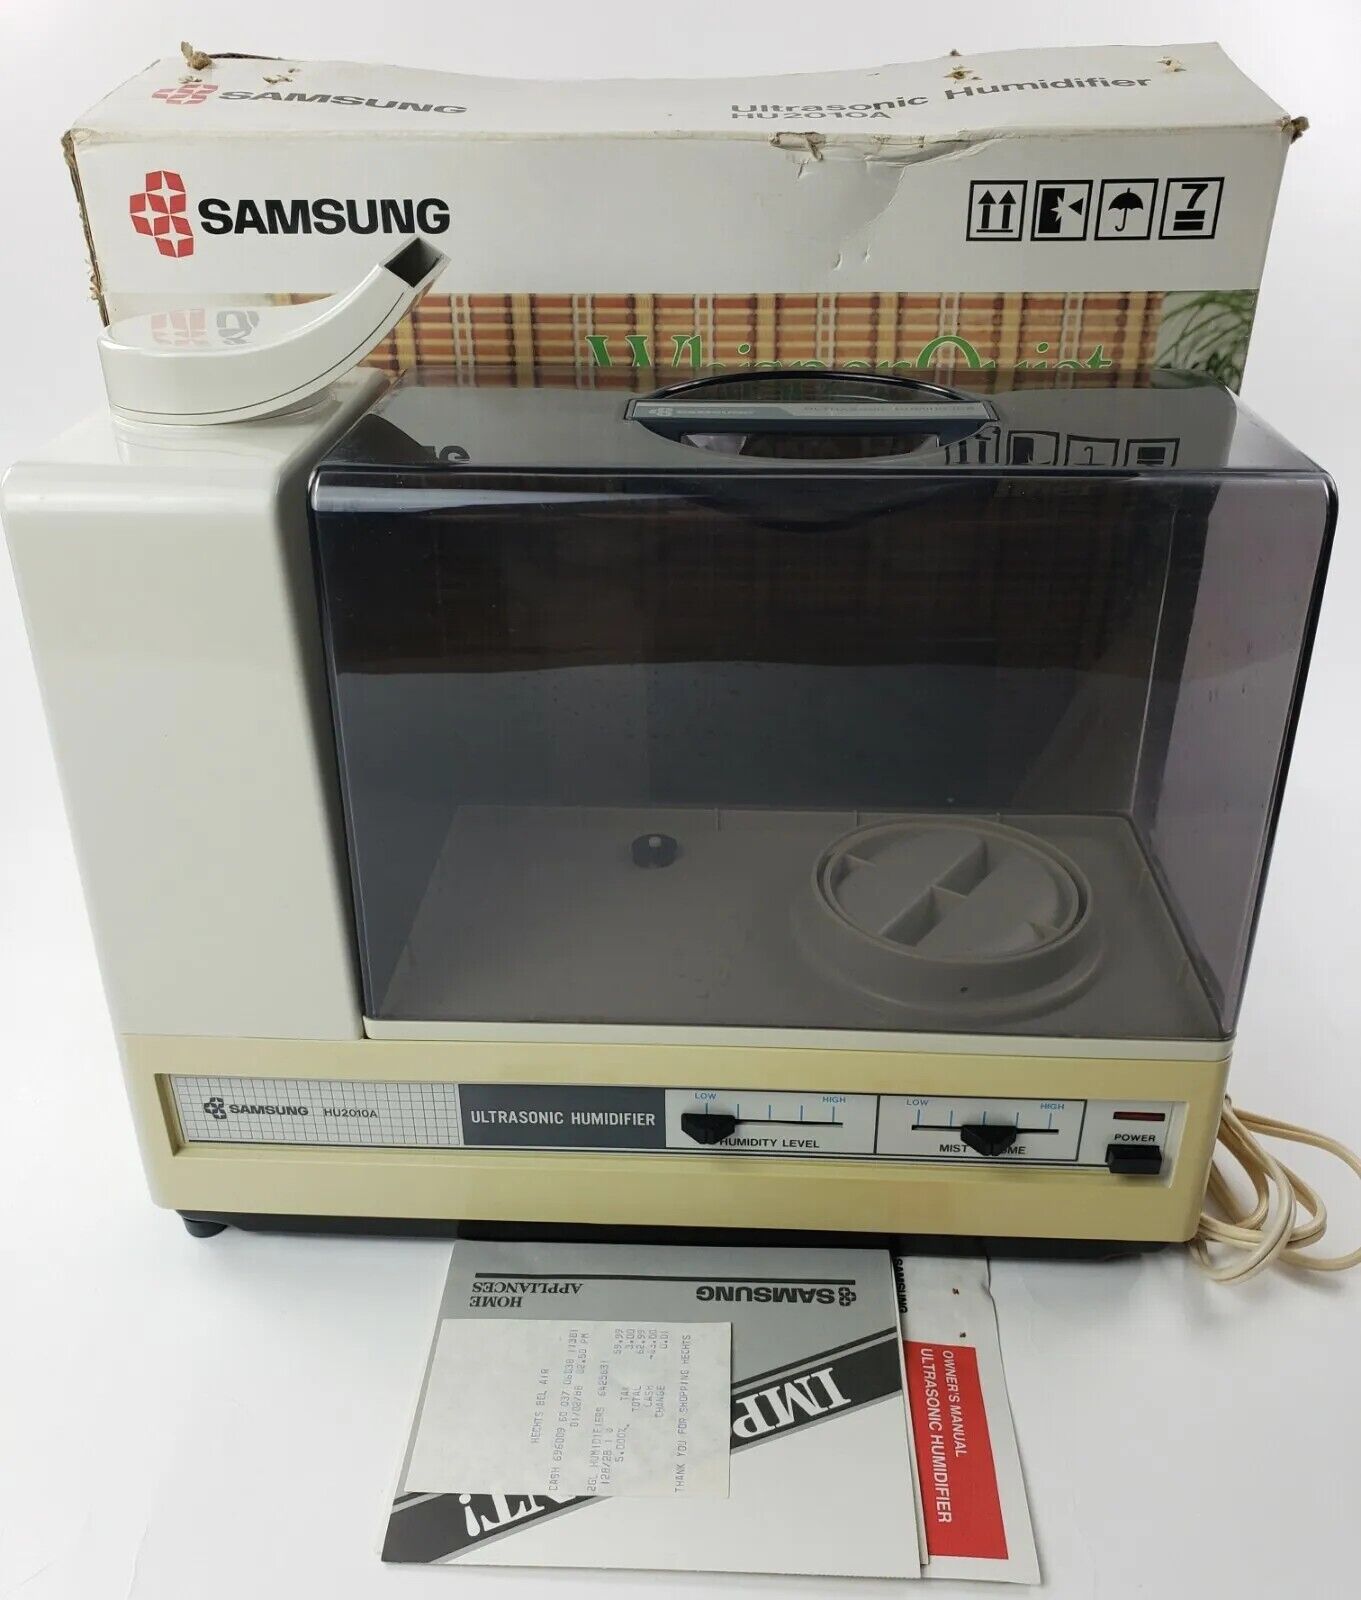 Samsung Vintage Humidifier Whisper Quiet Ultrasonic 1987 Original Receipt Manual